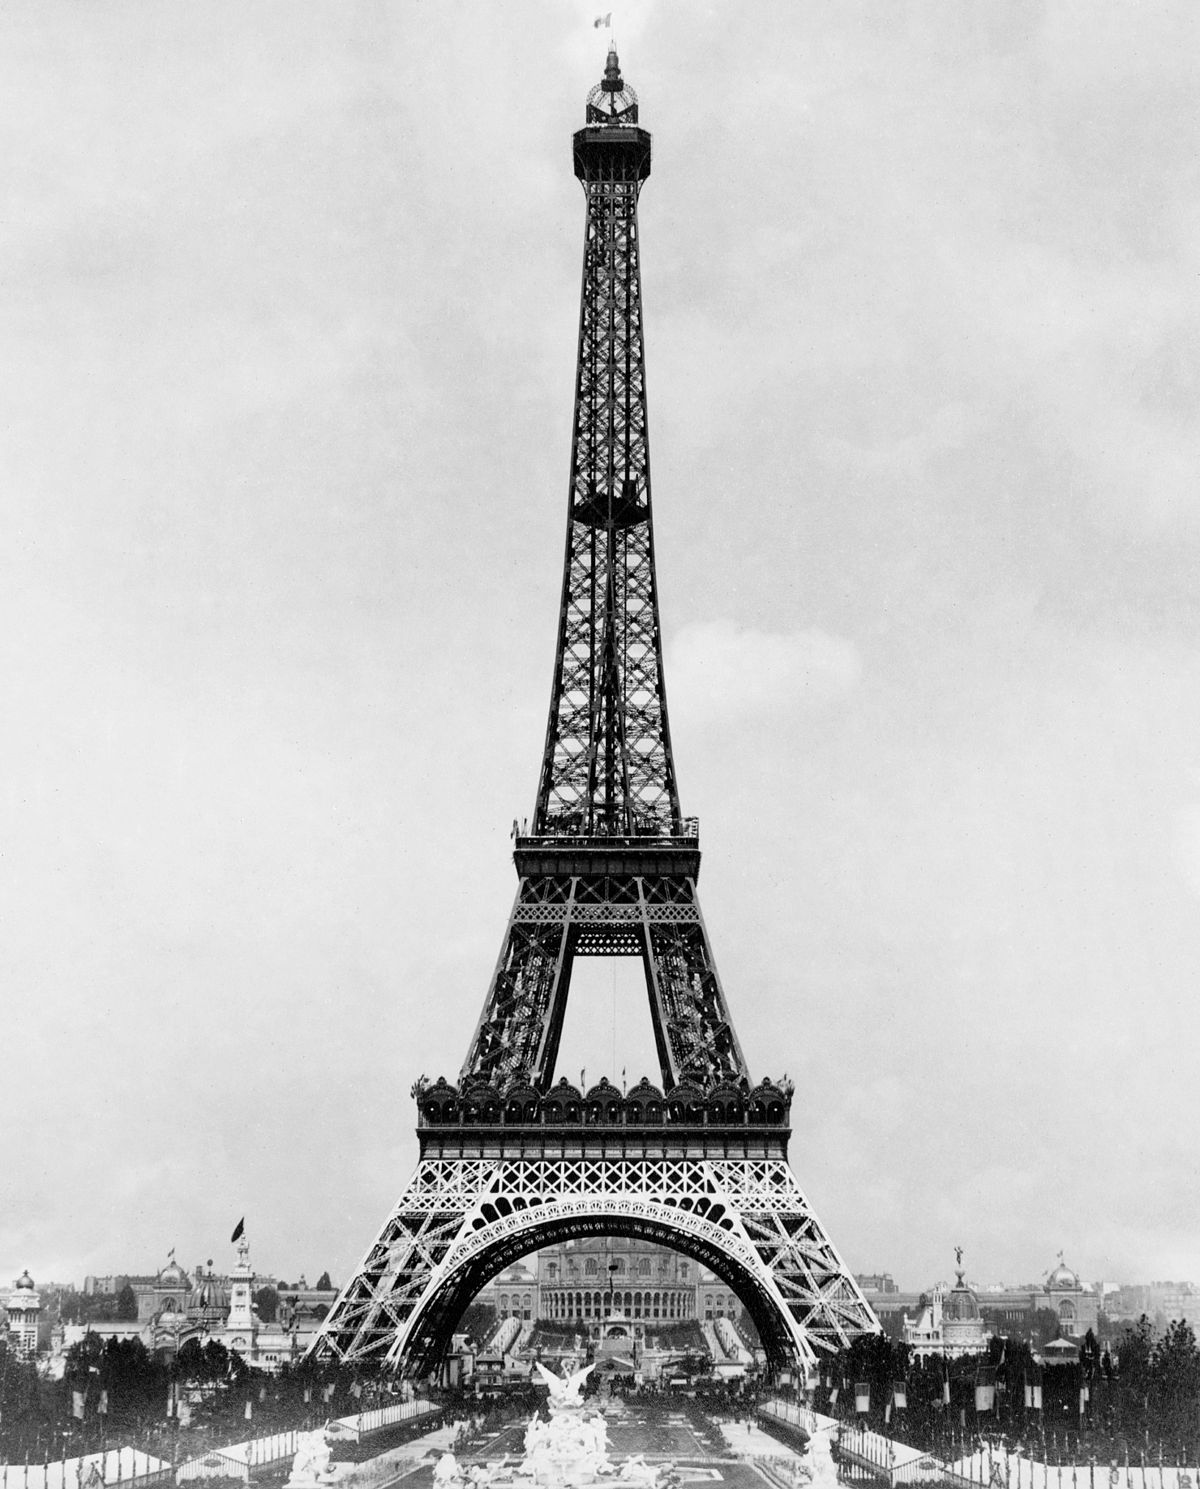 Tour Eiffel 3c02660.jpg